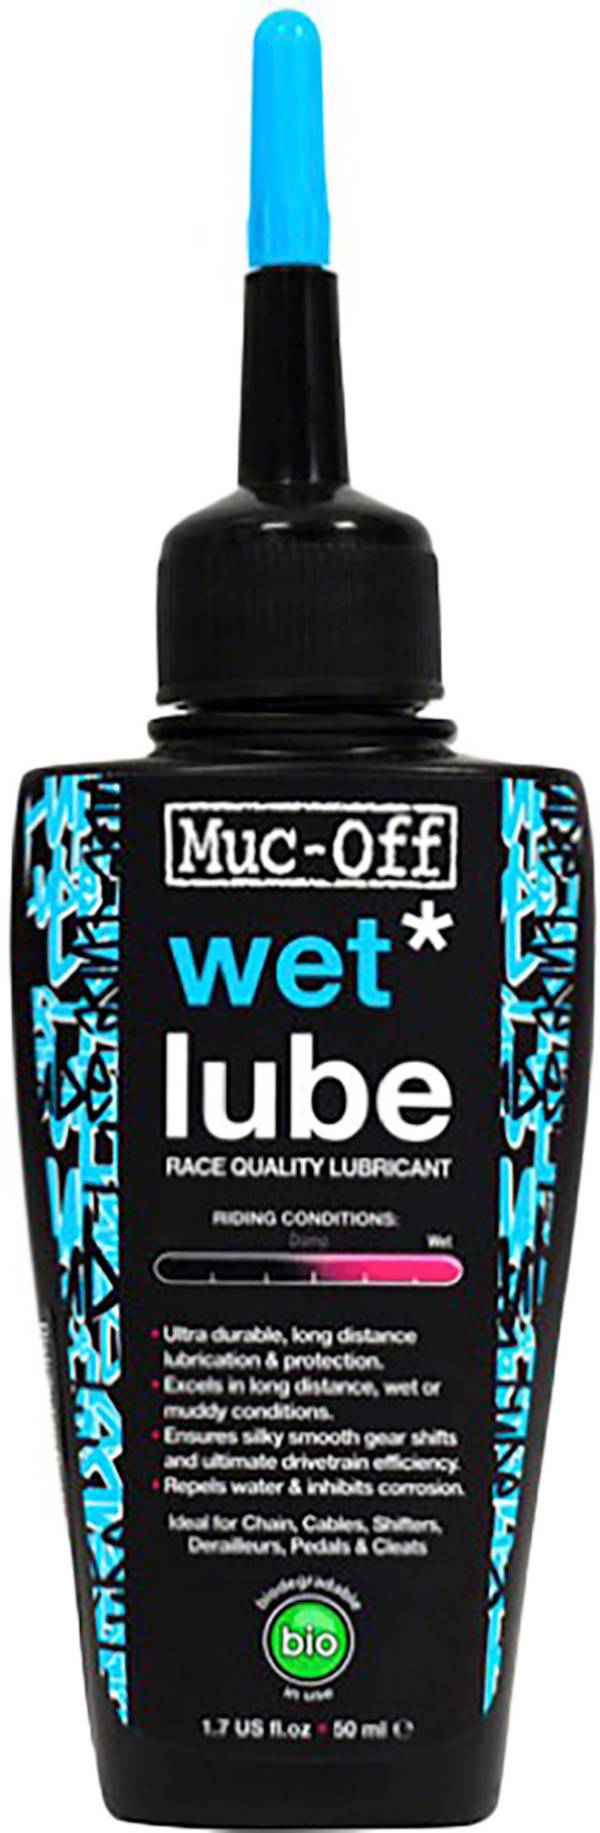 Muc-Off Bio Wet Chain Lube product image